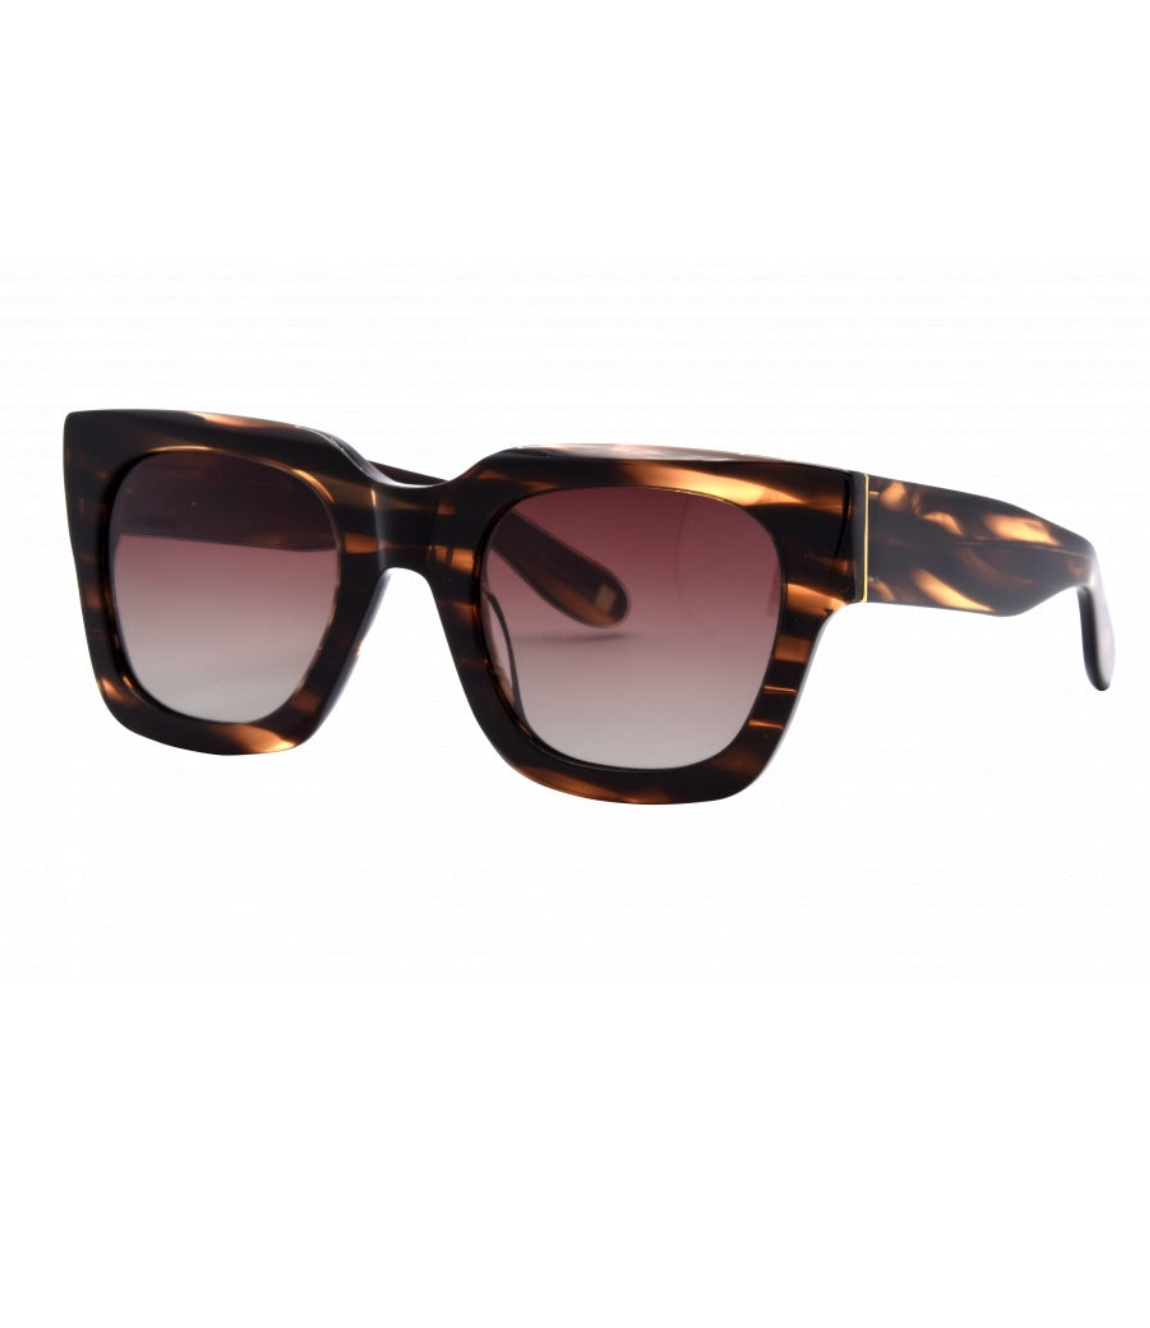 Jolene iSea Sunglasses - Tiger Stripe/Brown - Clothe Boutique